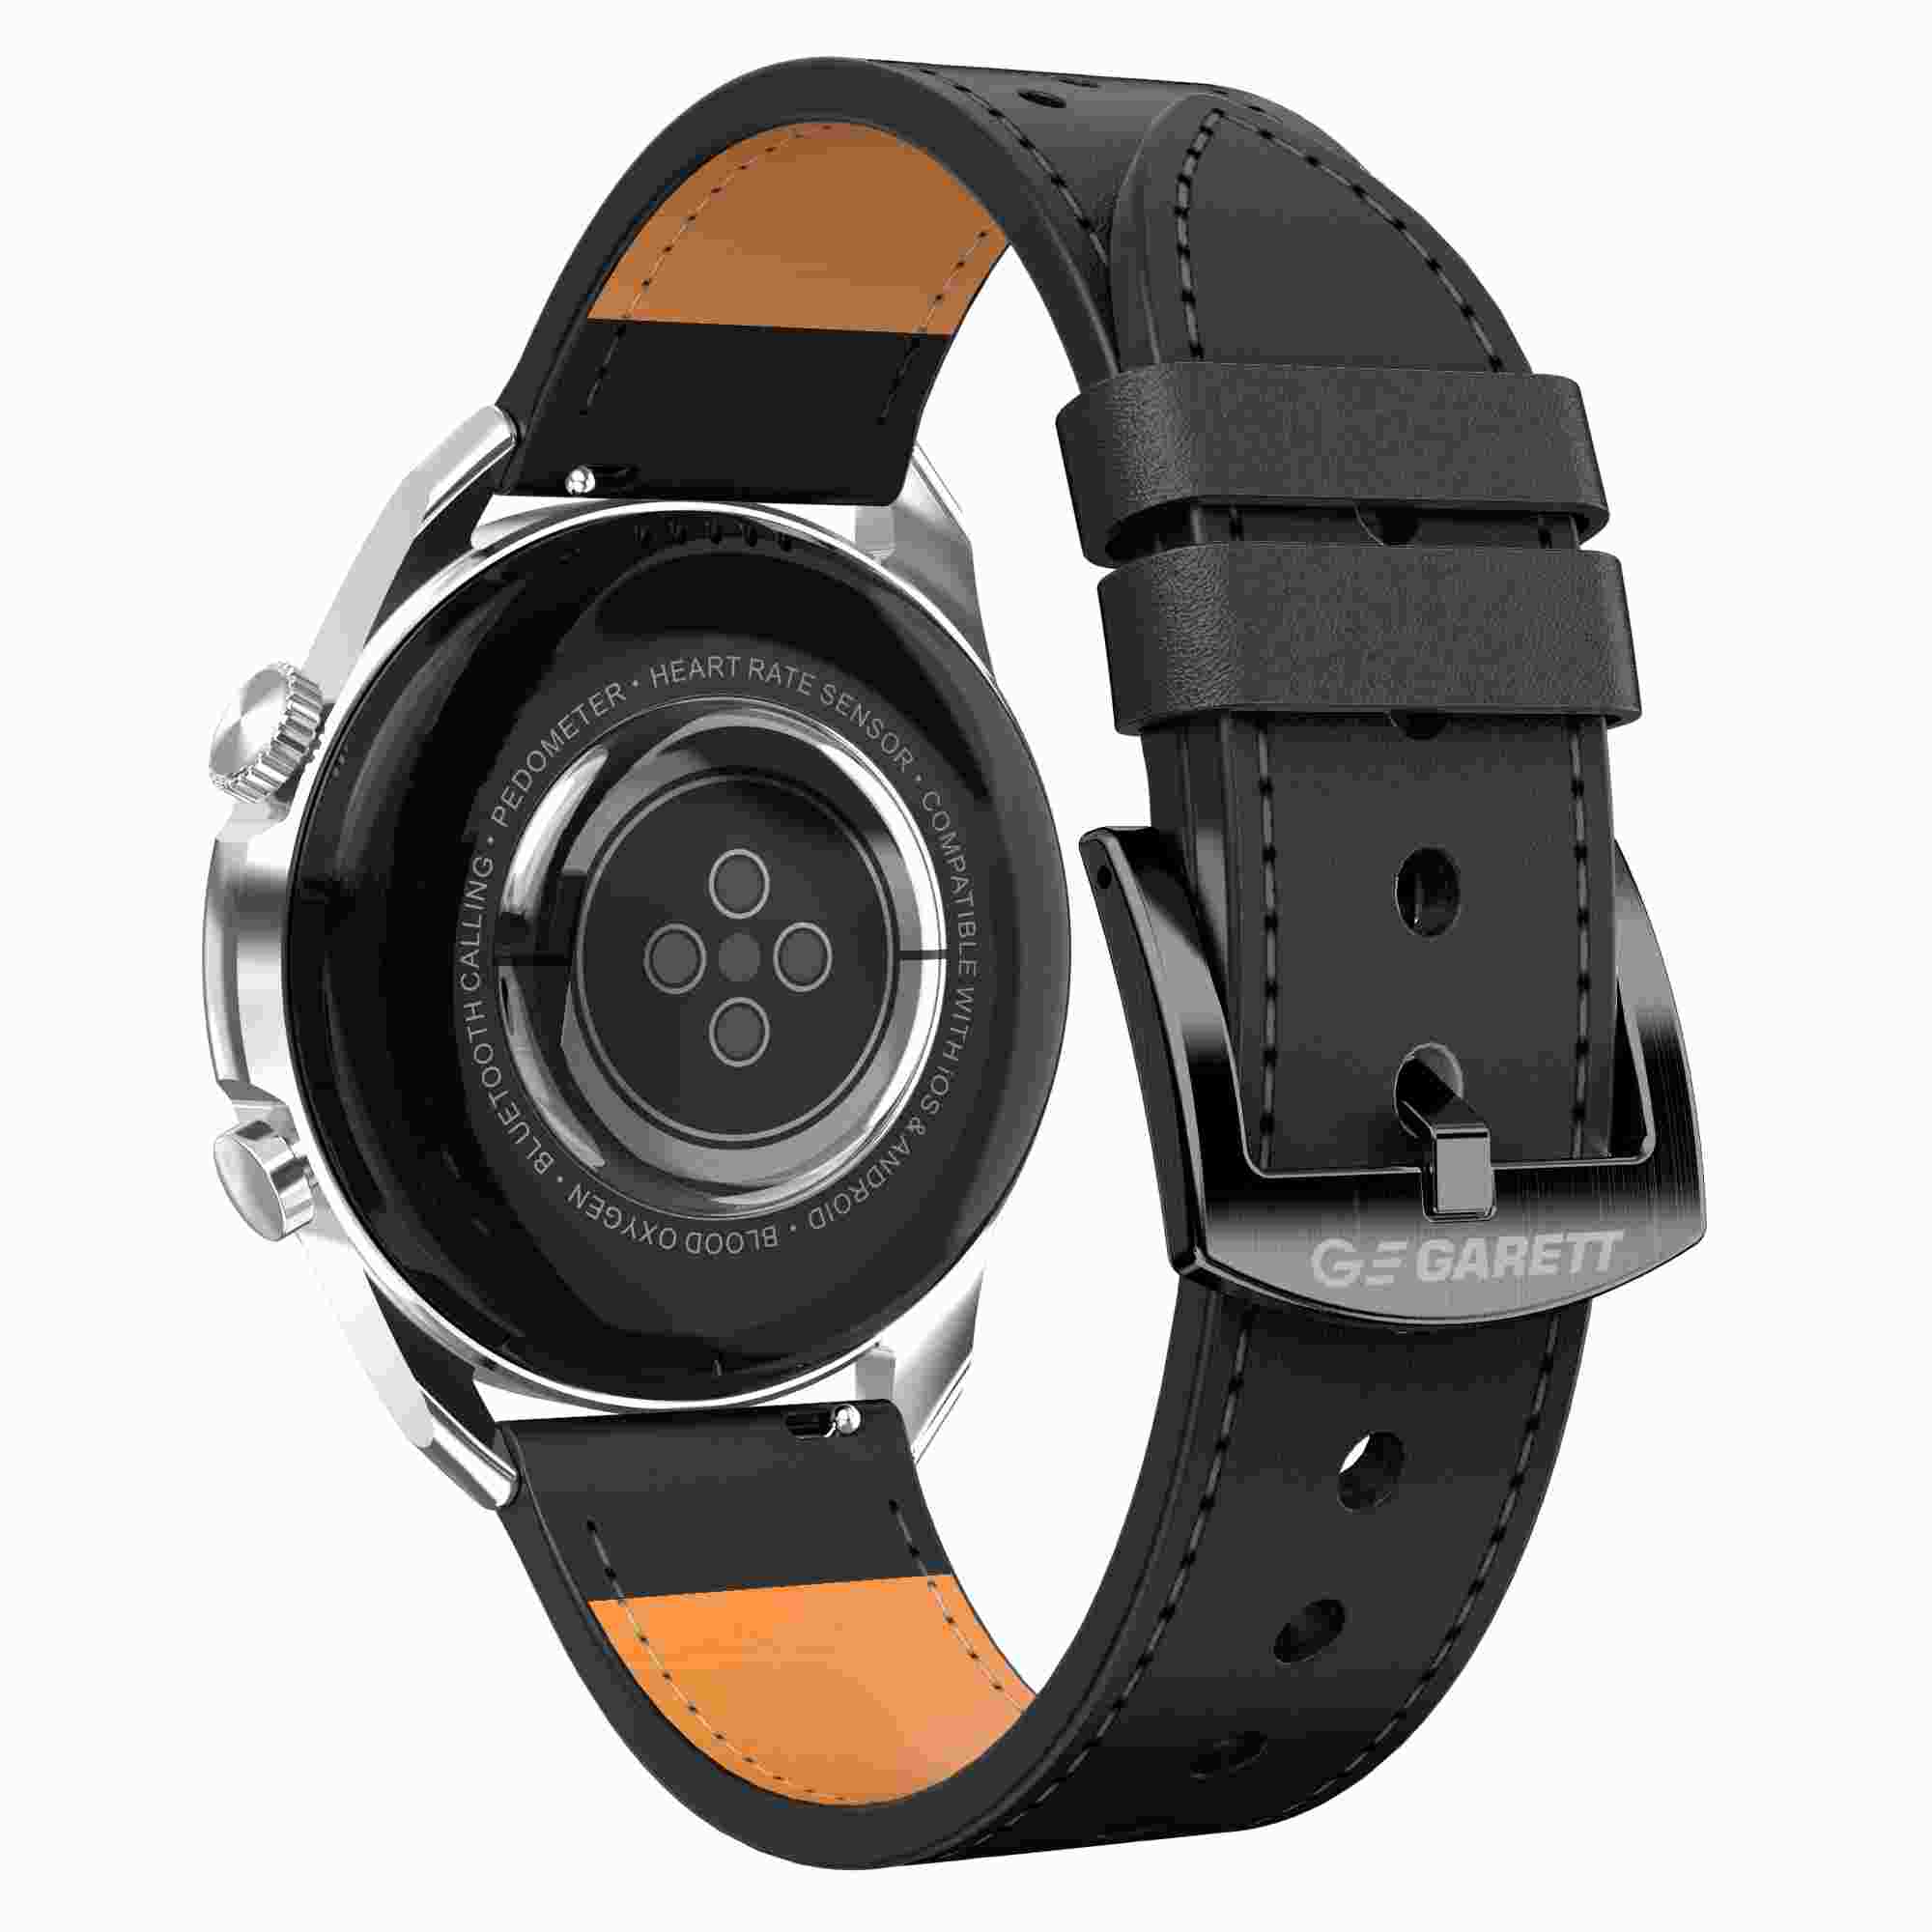 Garett Smartwatch V10 Silver-black leather5 